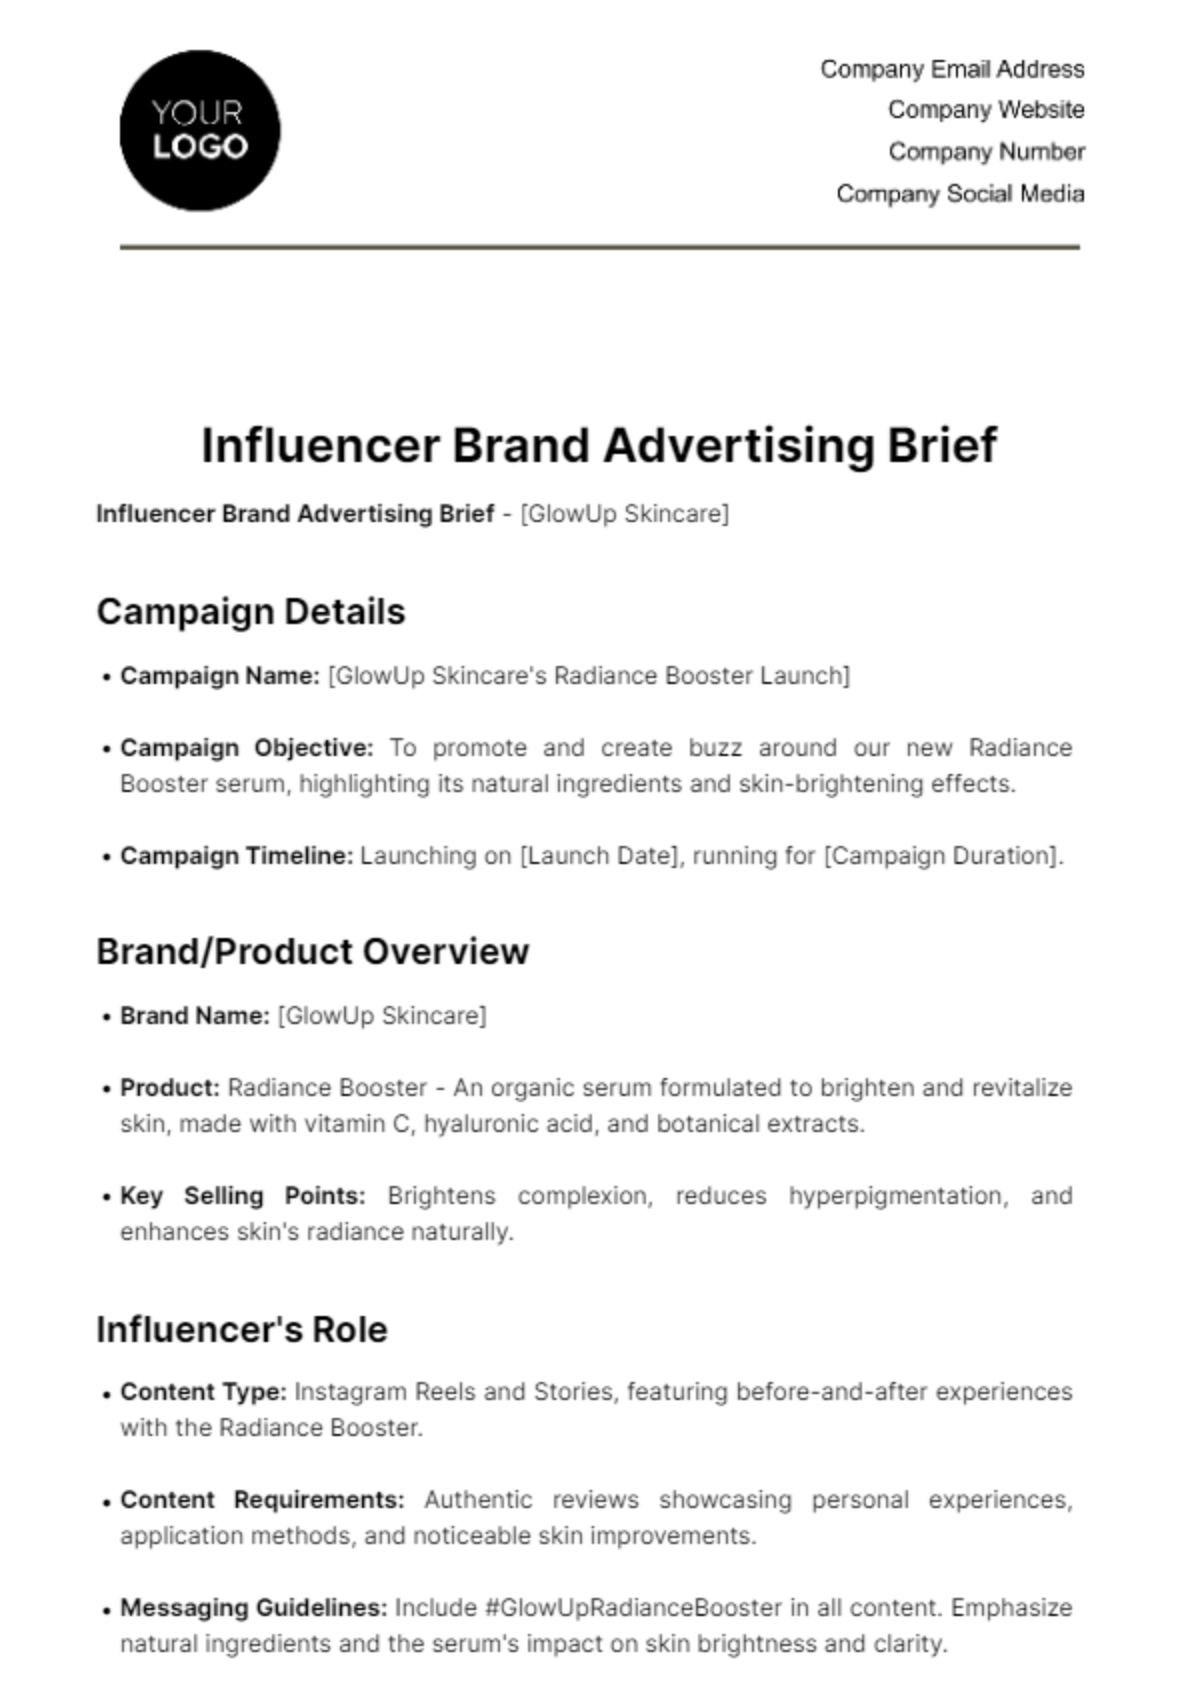 Influencer Brand Advertising Brief Template